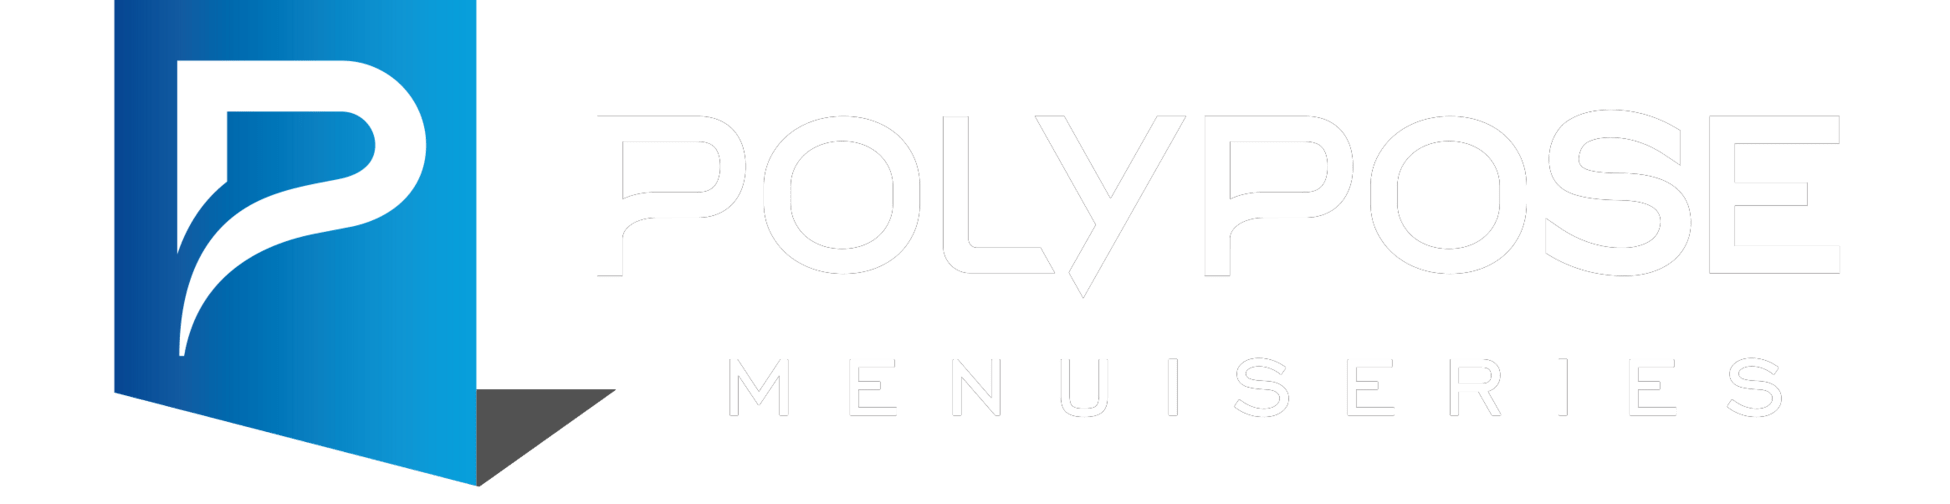 Polypose